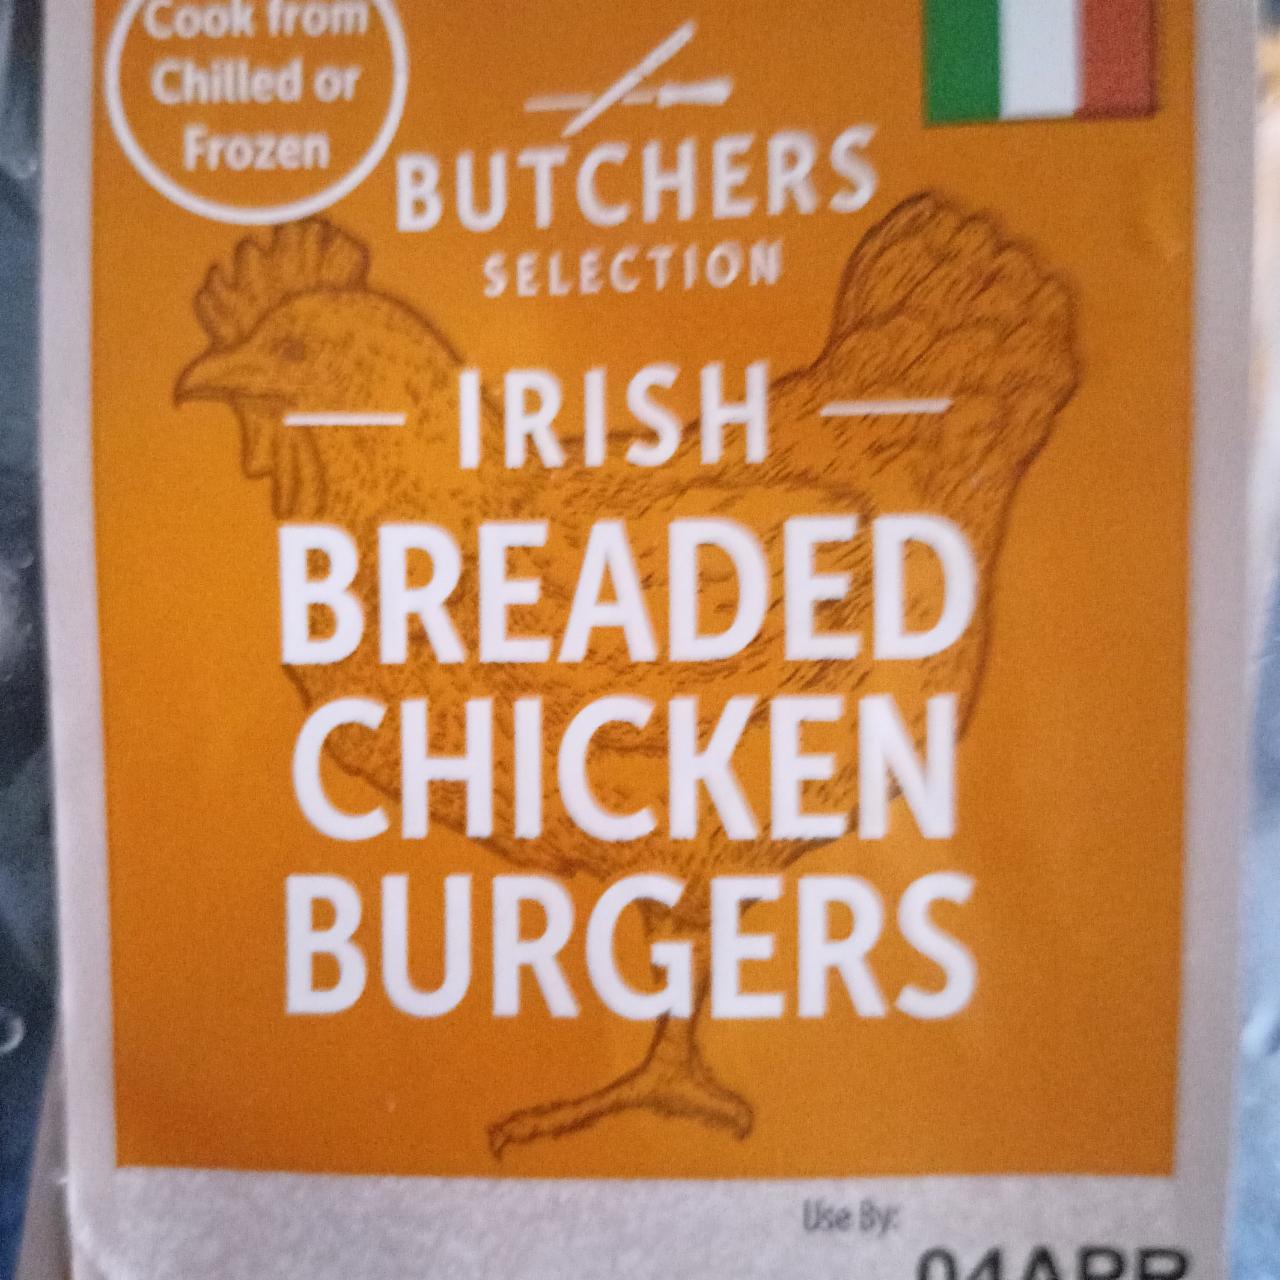 Фото - Куриная котлета для бургера Irish Breaded Chicken Burgers Butcher's Selection